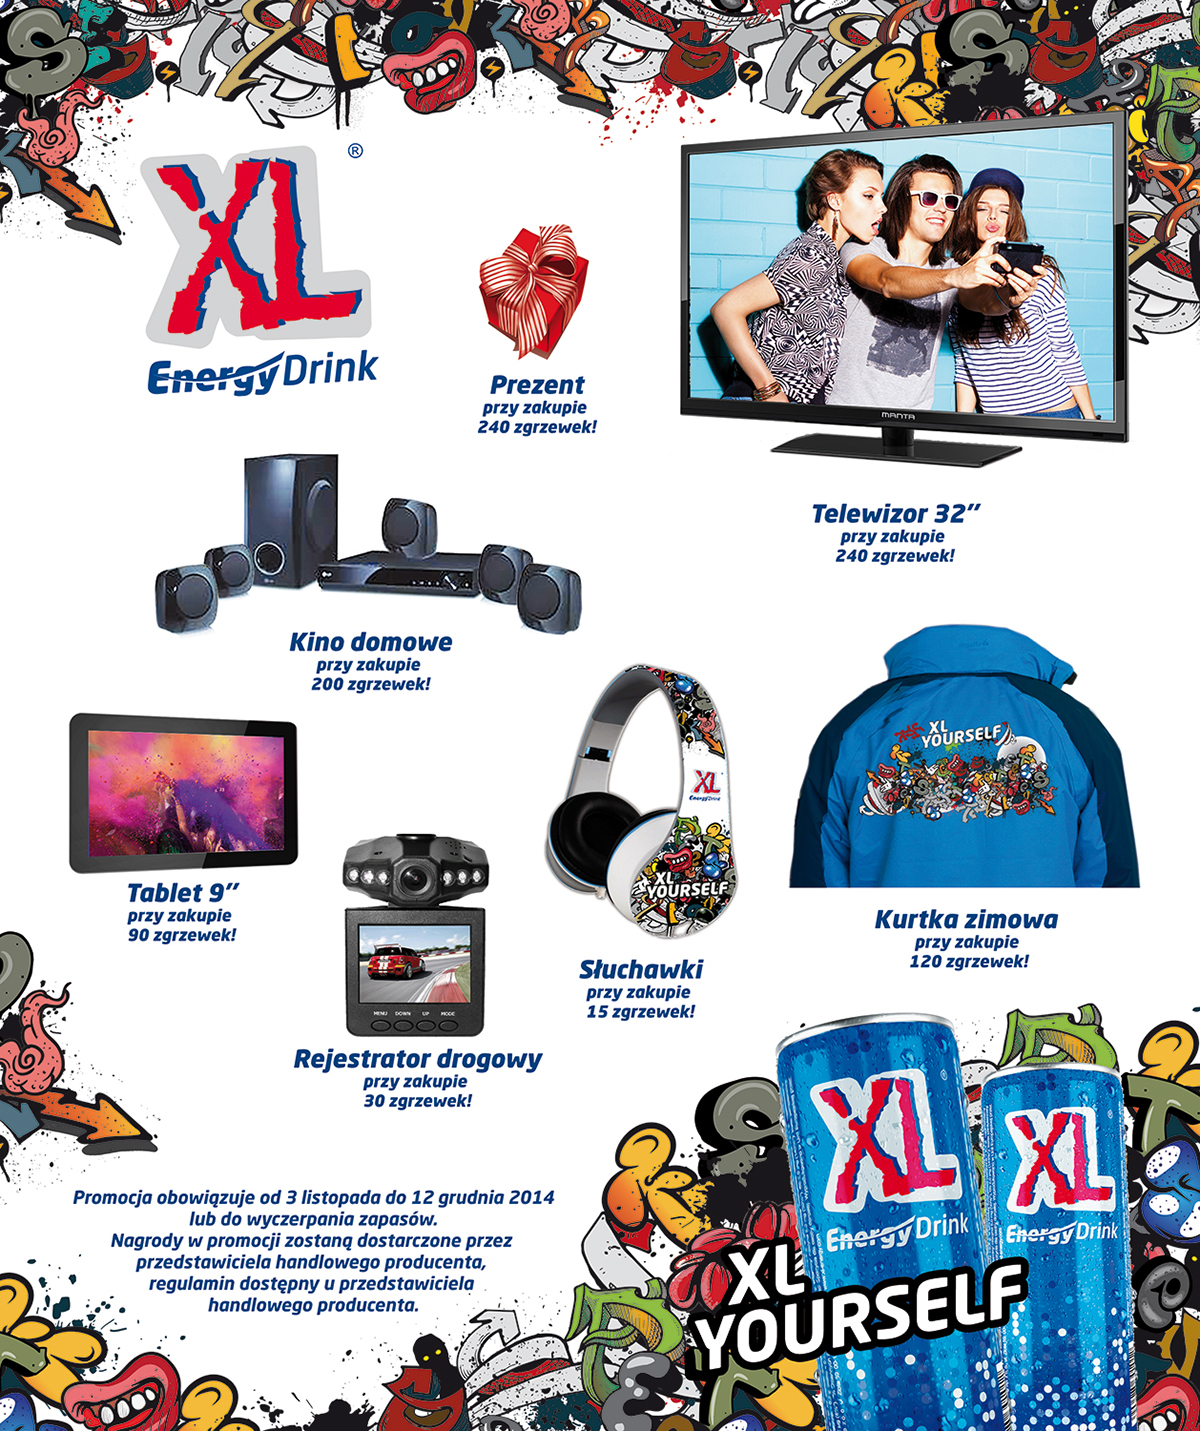 artur dziedzic XL Energy Drink xl Graffiti energy drink